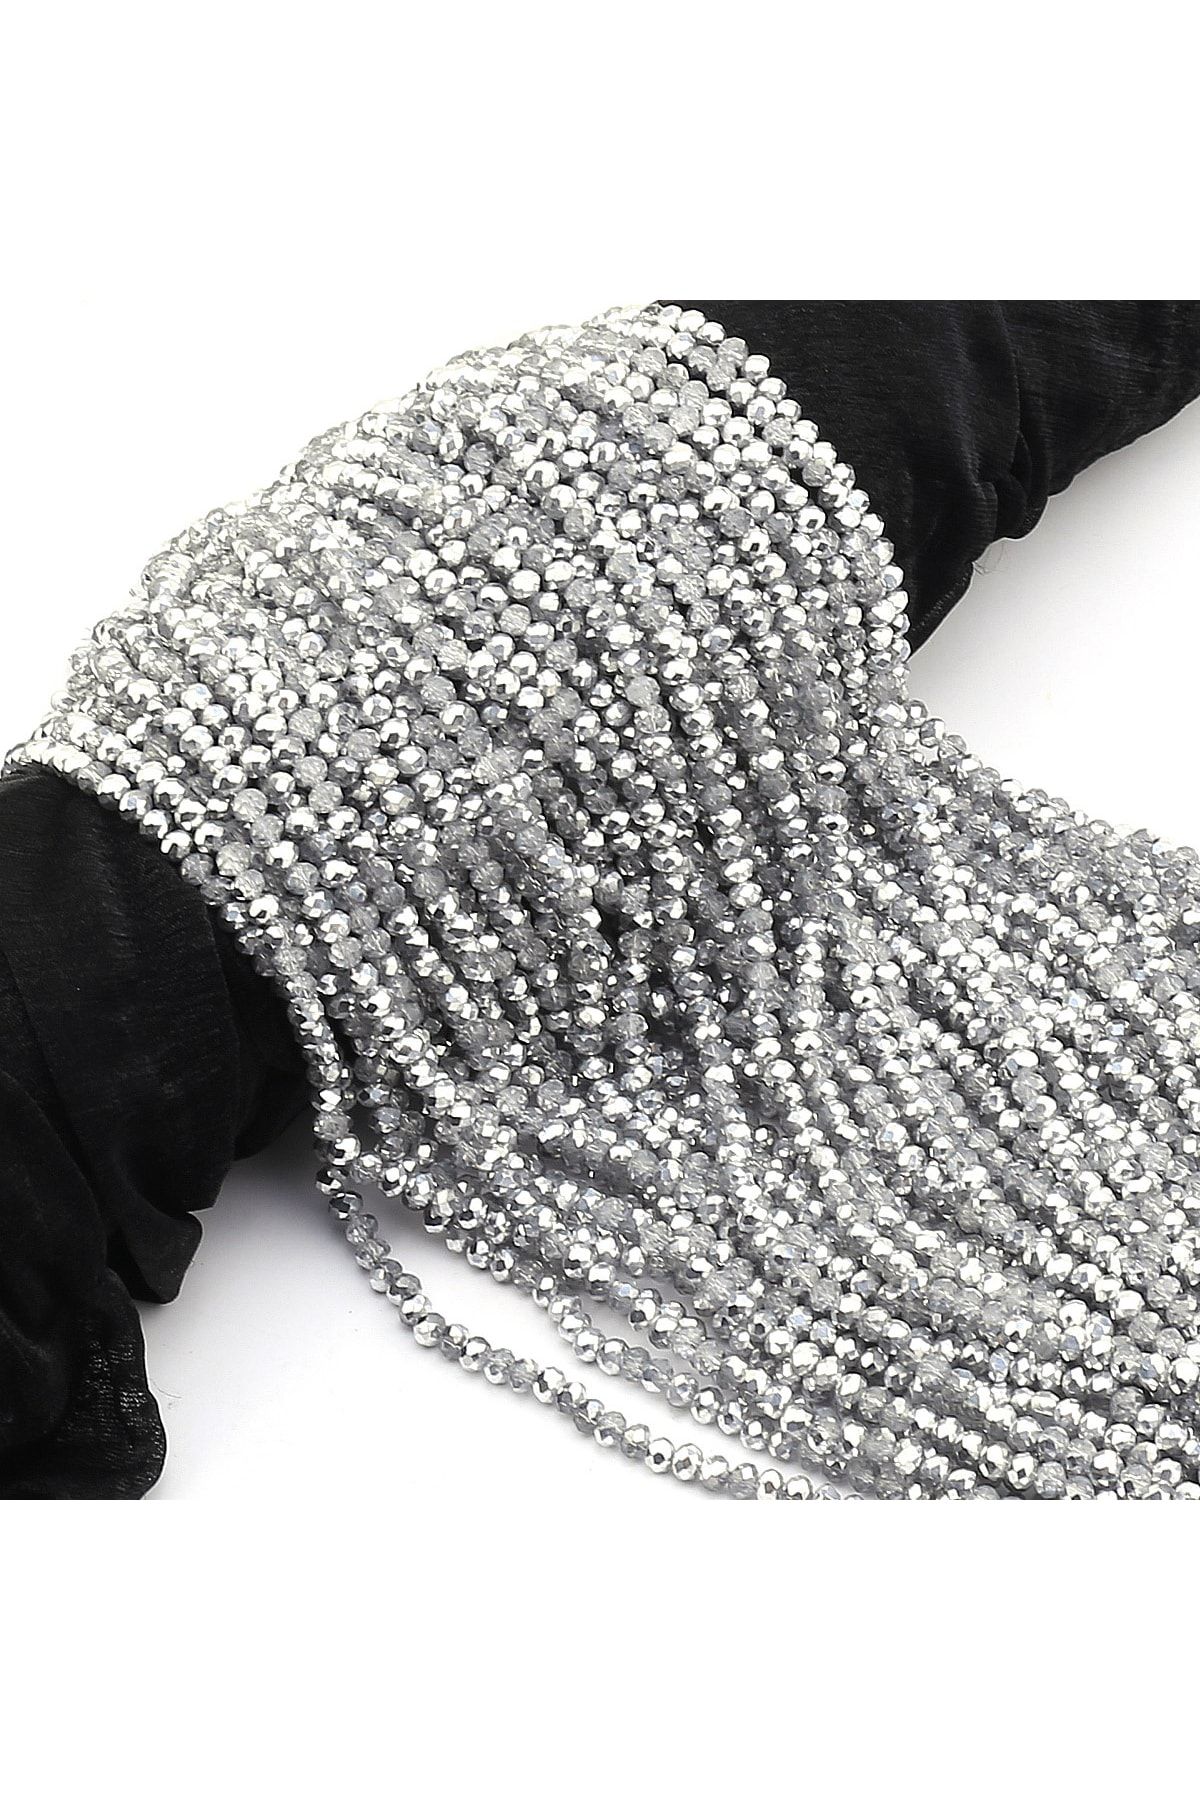 Hobi Dünya 6 Mm Parlak Gümüş Kristal Cam Boncuk